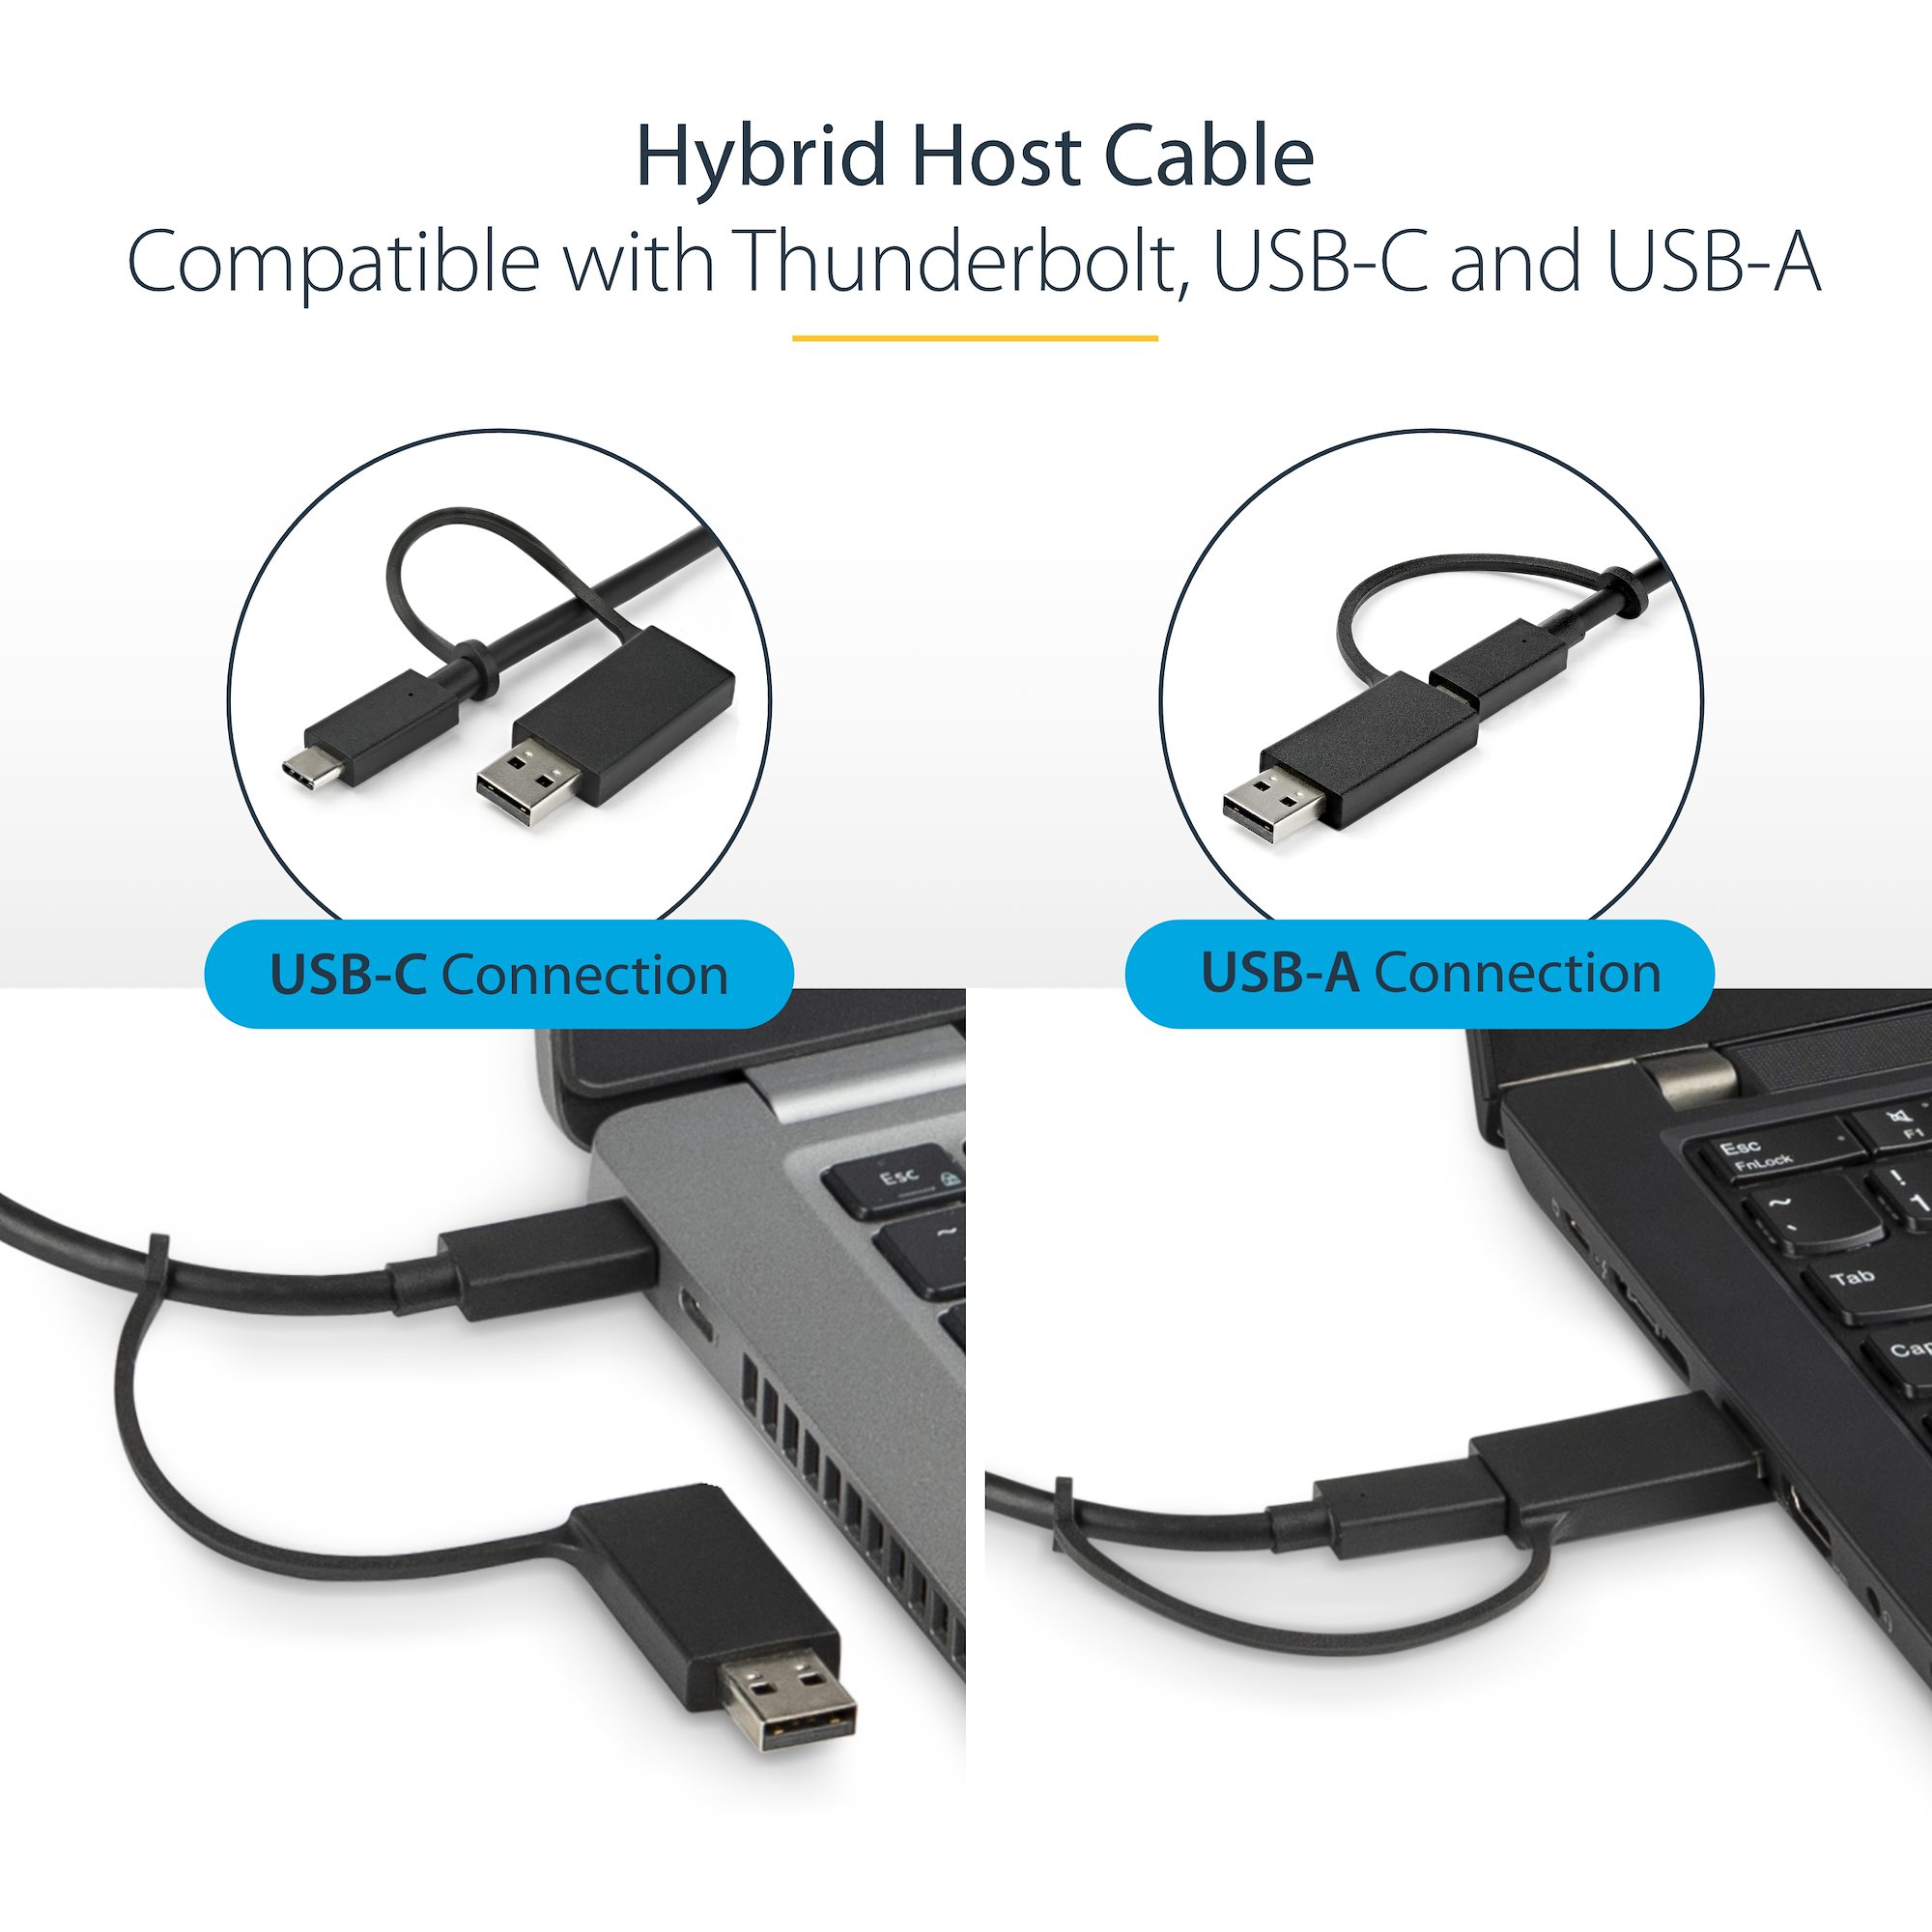 5K/4K Pro USB C Docking Station with Laptop Power Delivery; Dual Display  HDMI+DisplayPort; Gigabit Ethernet RJ45; USB 3.0/2.0, Audio Jack